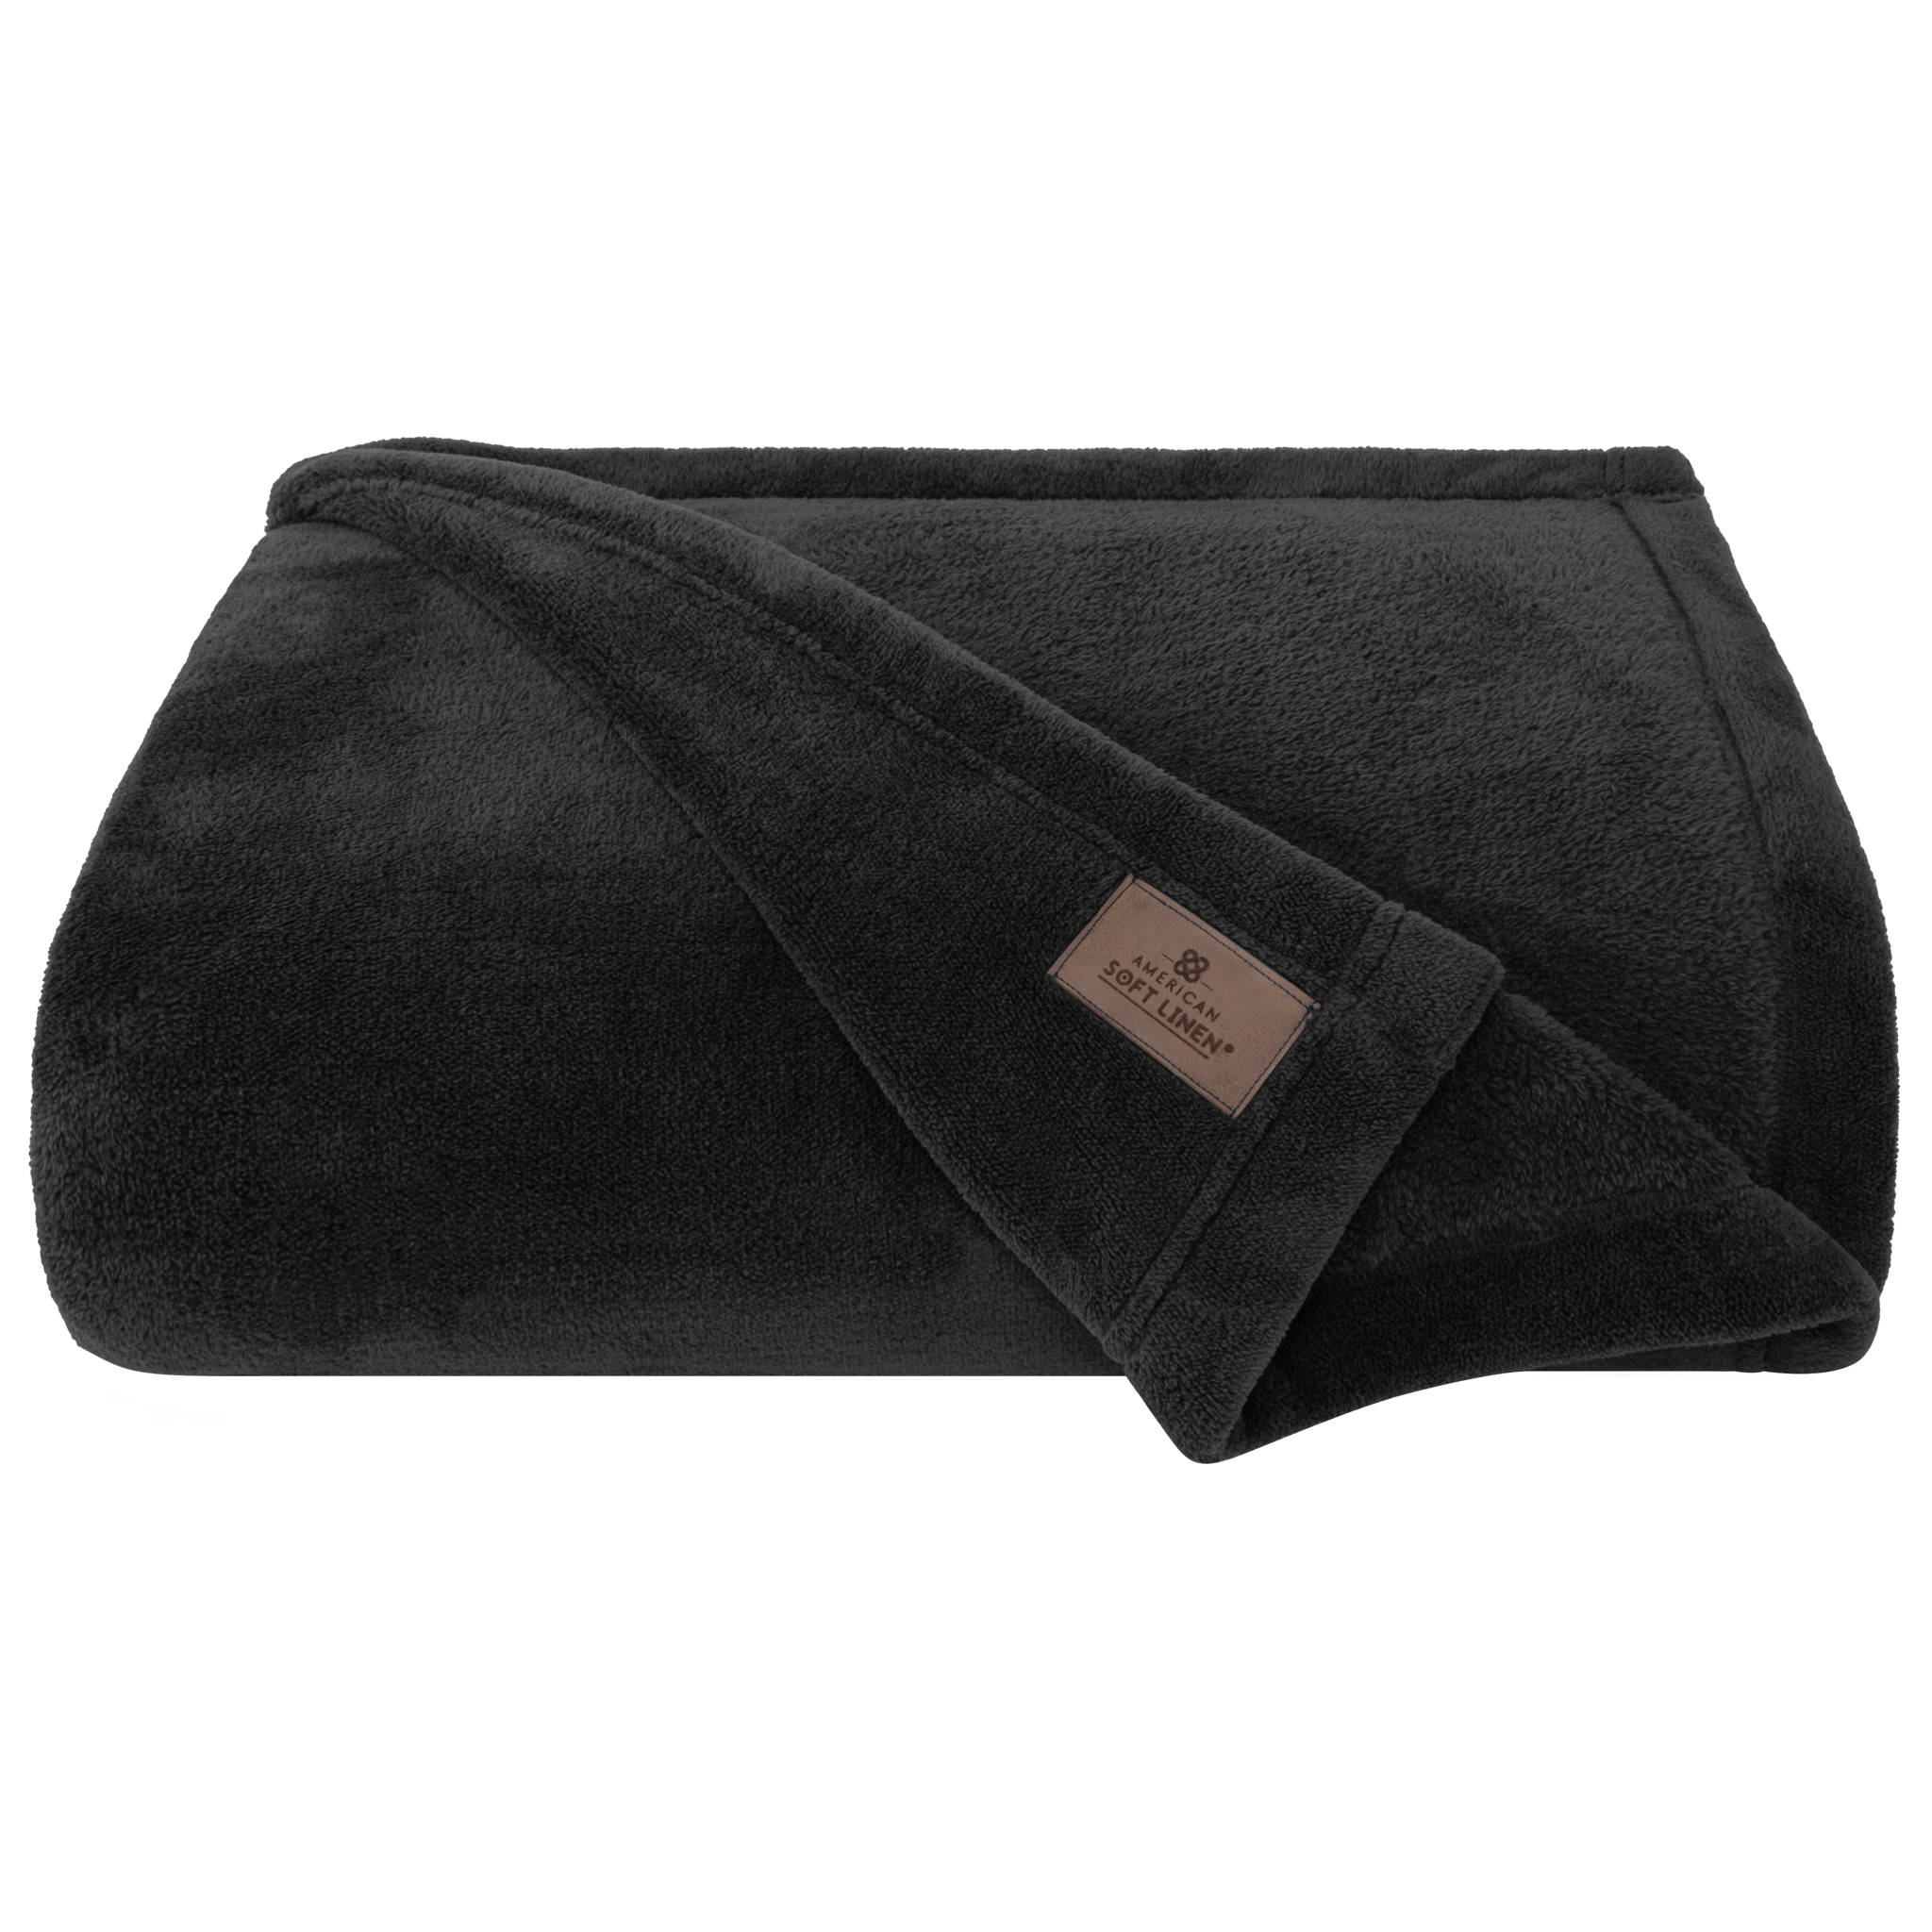 American Soft Linen - Bedding Fleece Blanket - Wholesale - 9 Set Case Pack - Queen Size 85x90 inches - Black - 3